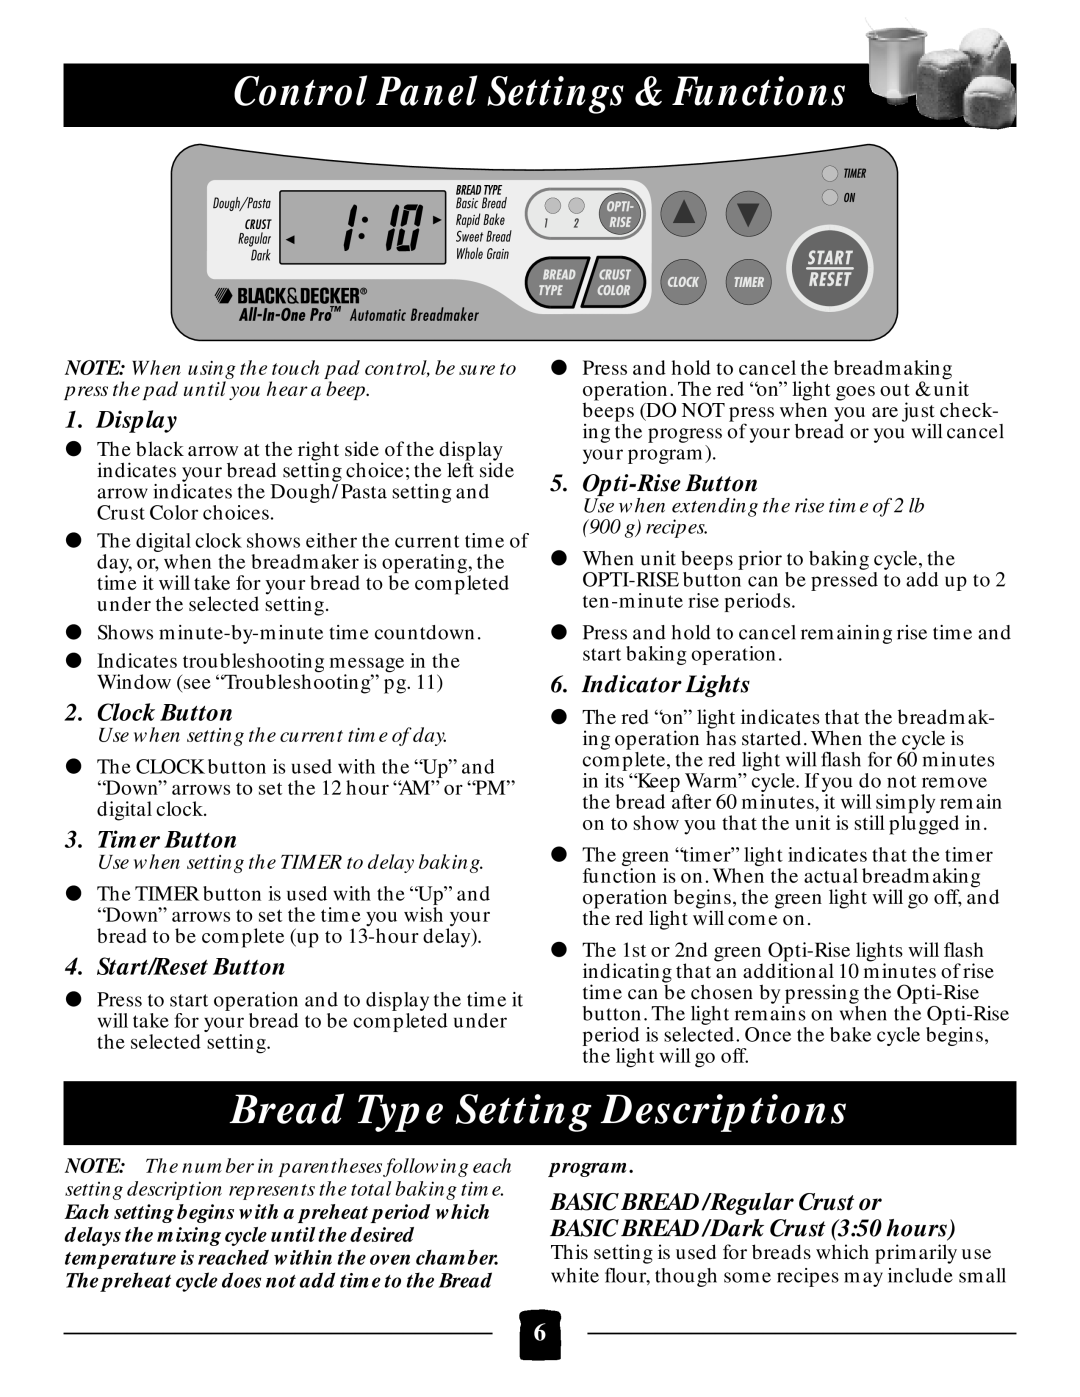 Black & Decker B1650 manual Control Panel Settings & Functions, Bread Type Setting Descriptions, Display, Clock Button 